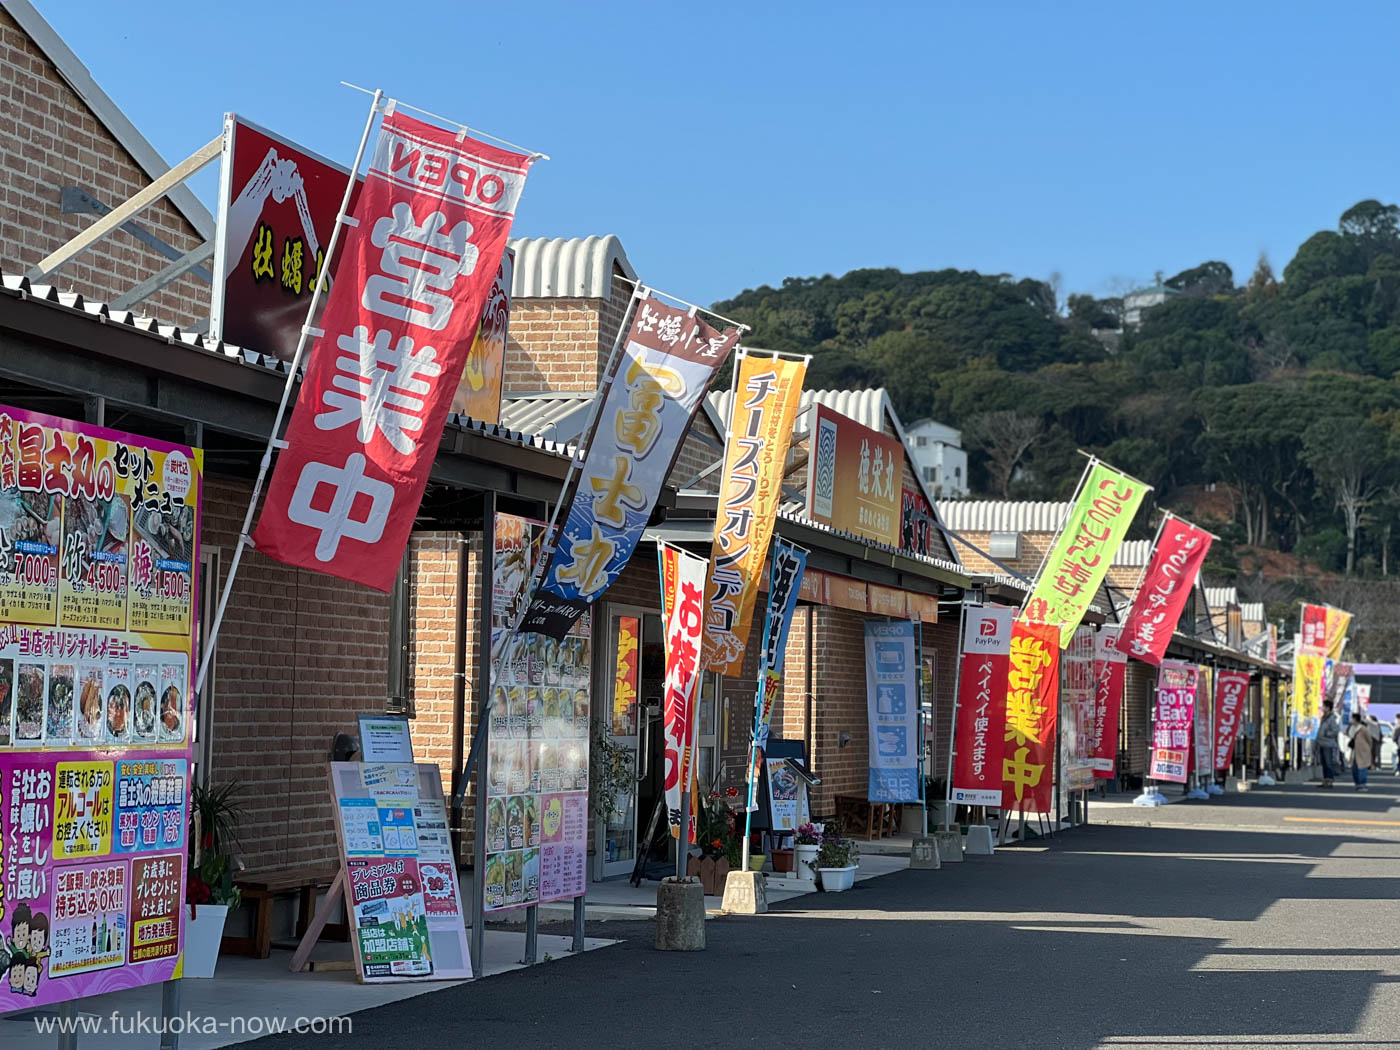 Itoshima Oyster Huts / 糸島のカキ小屋が立ち並ぶ風景